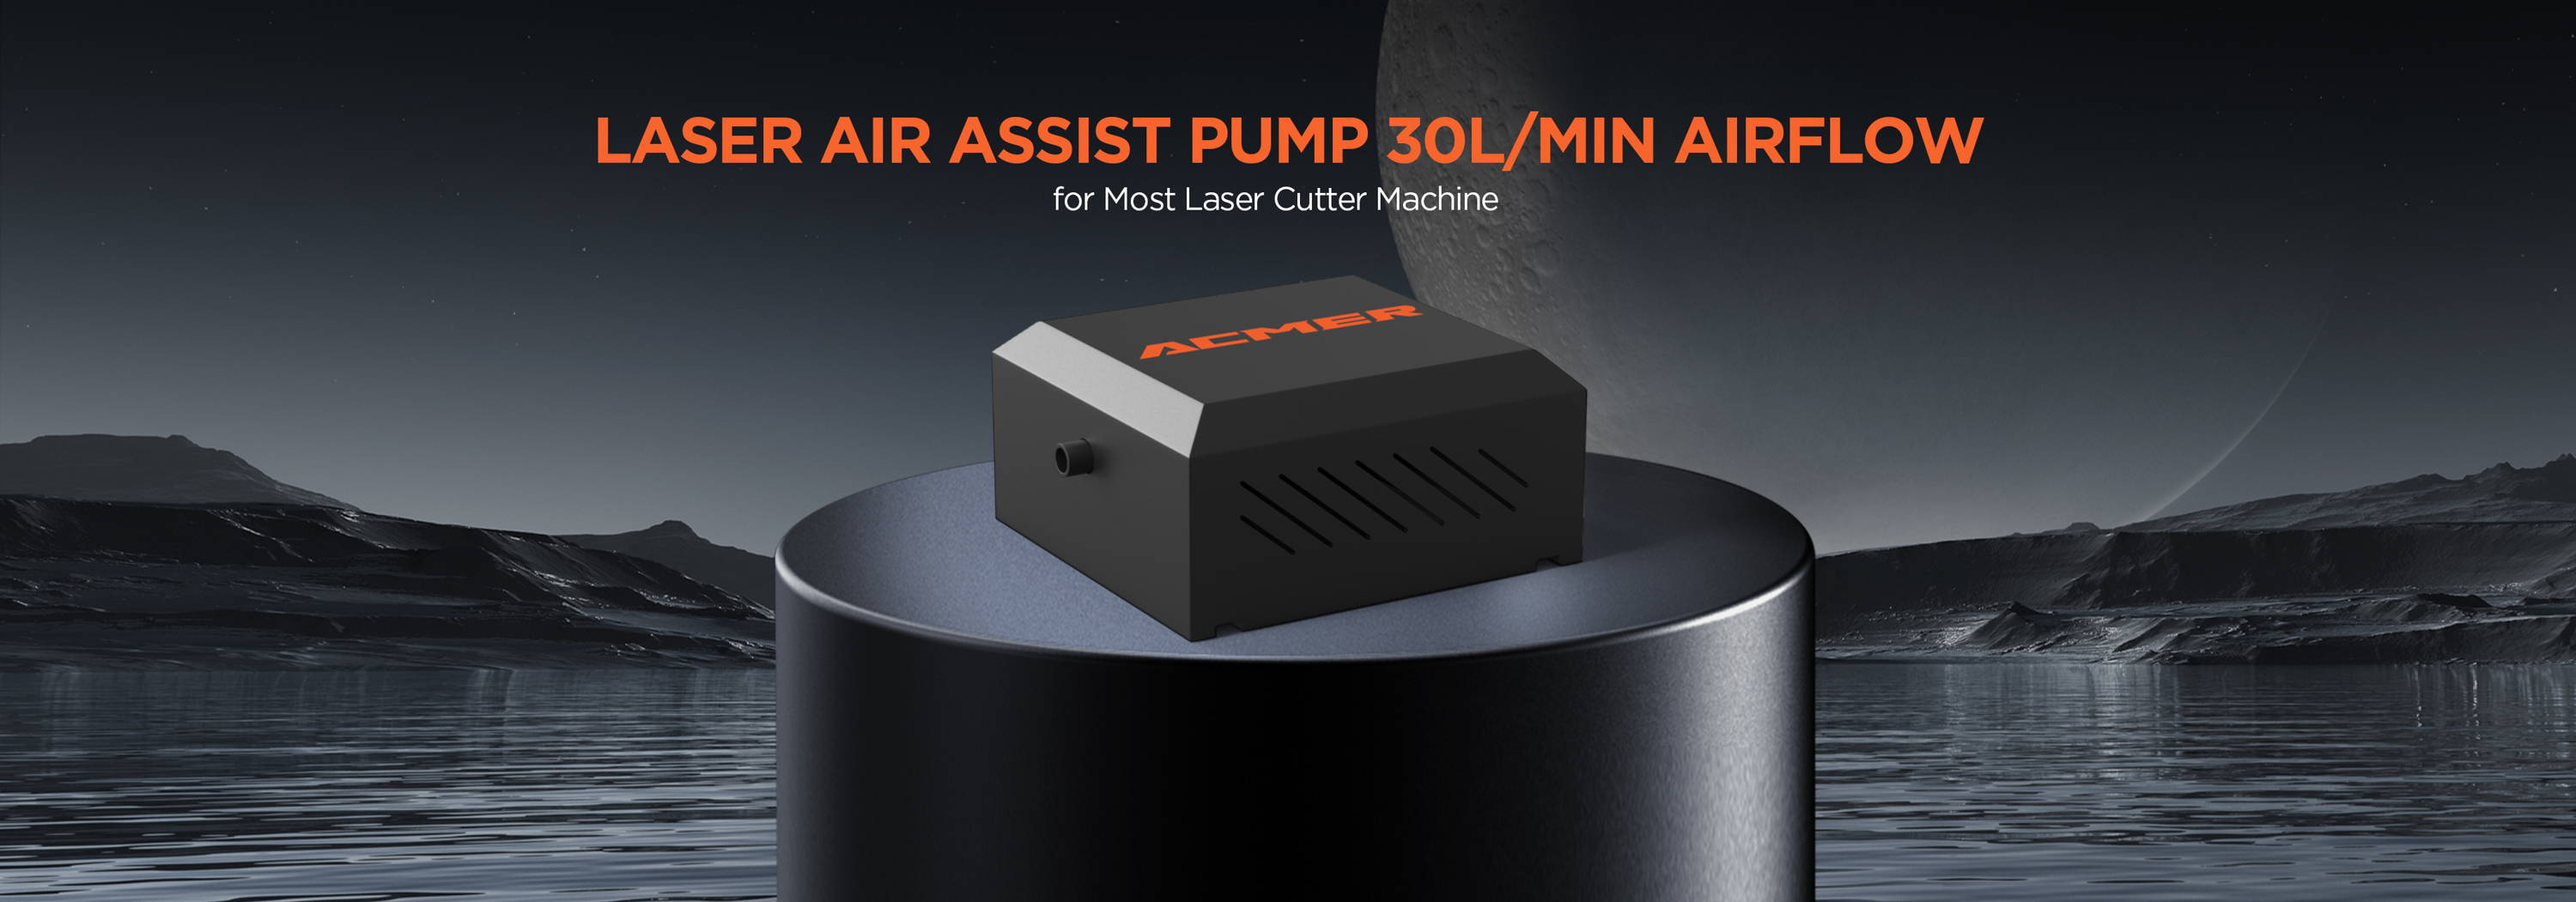 ACMER C4 Laser Air Assist Pump